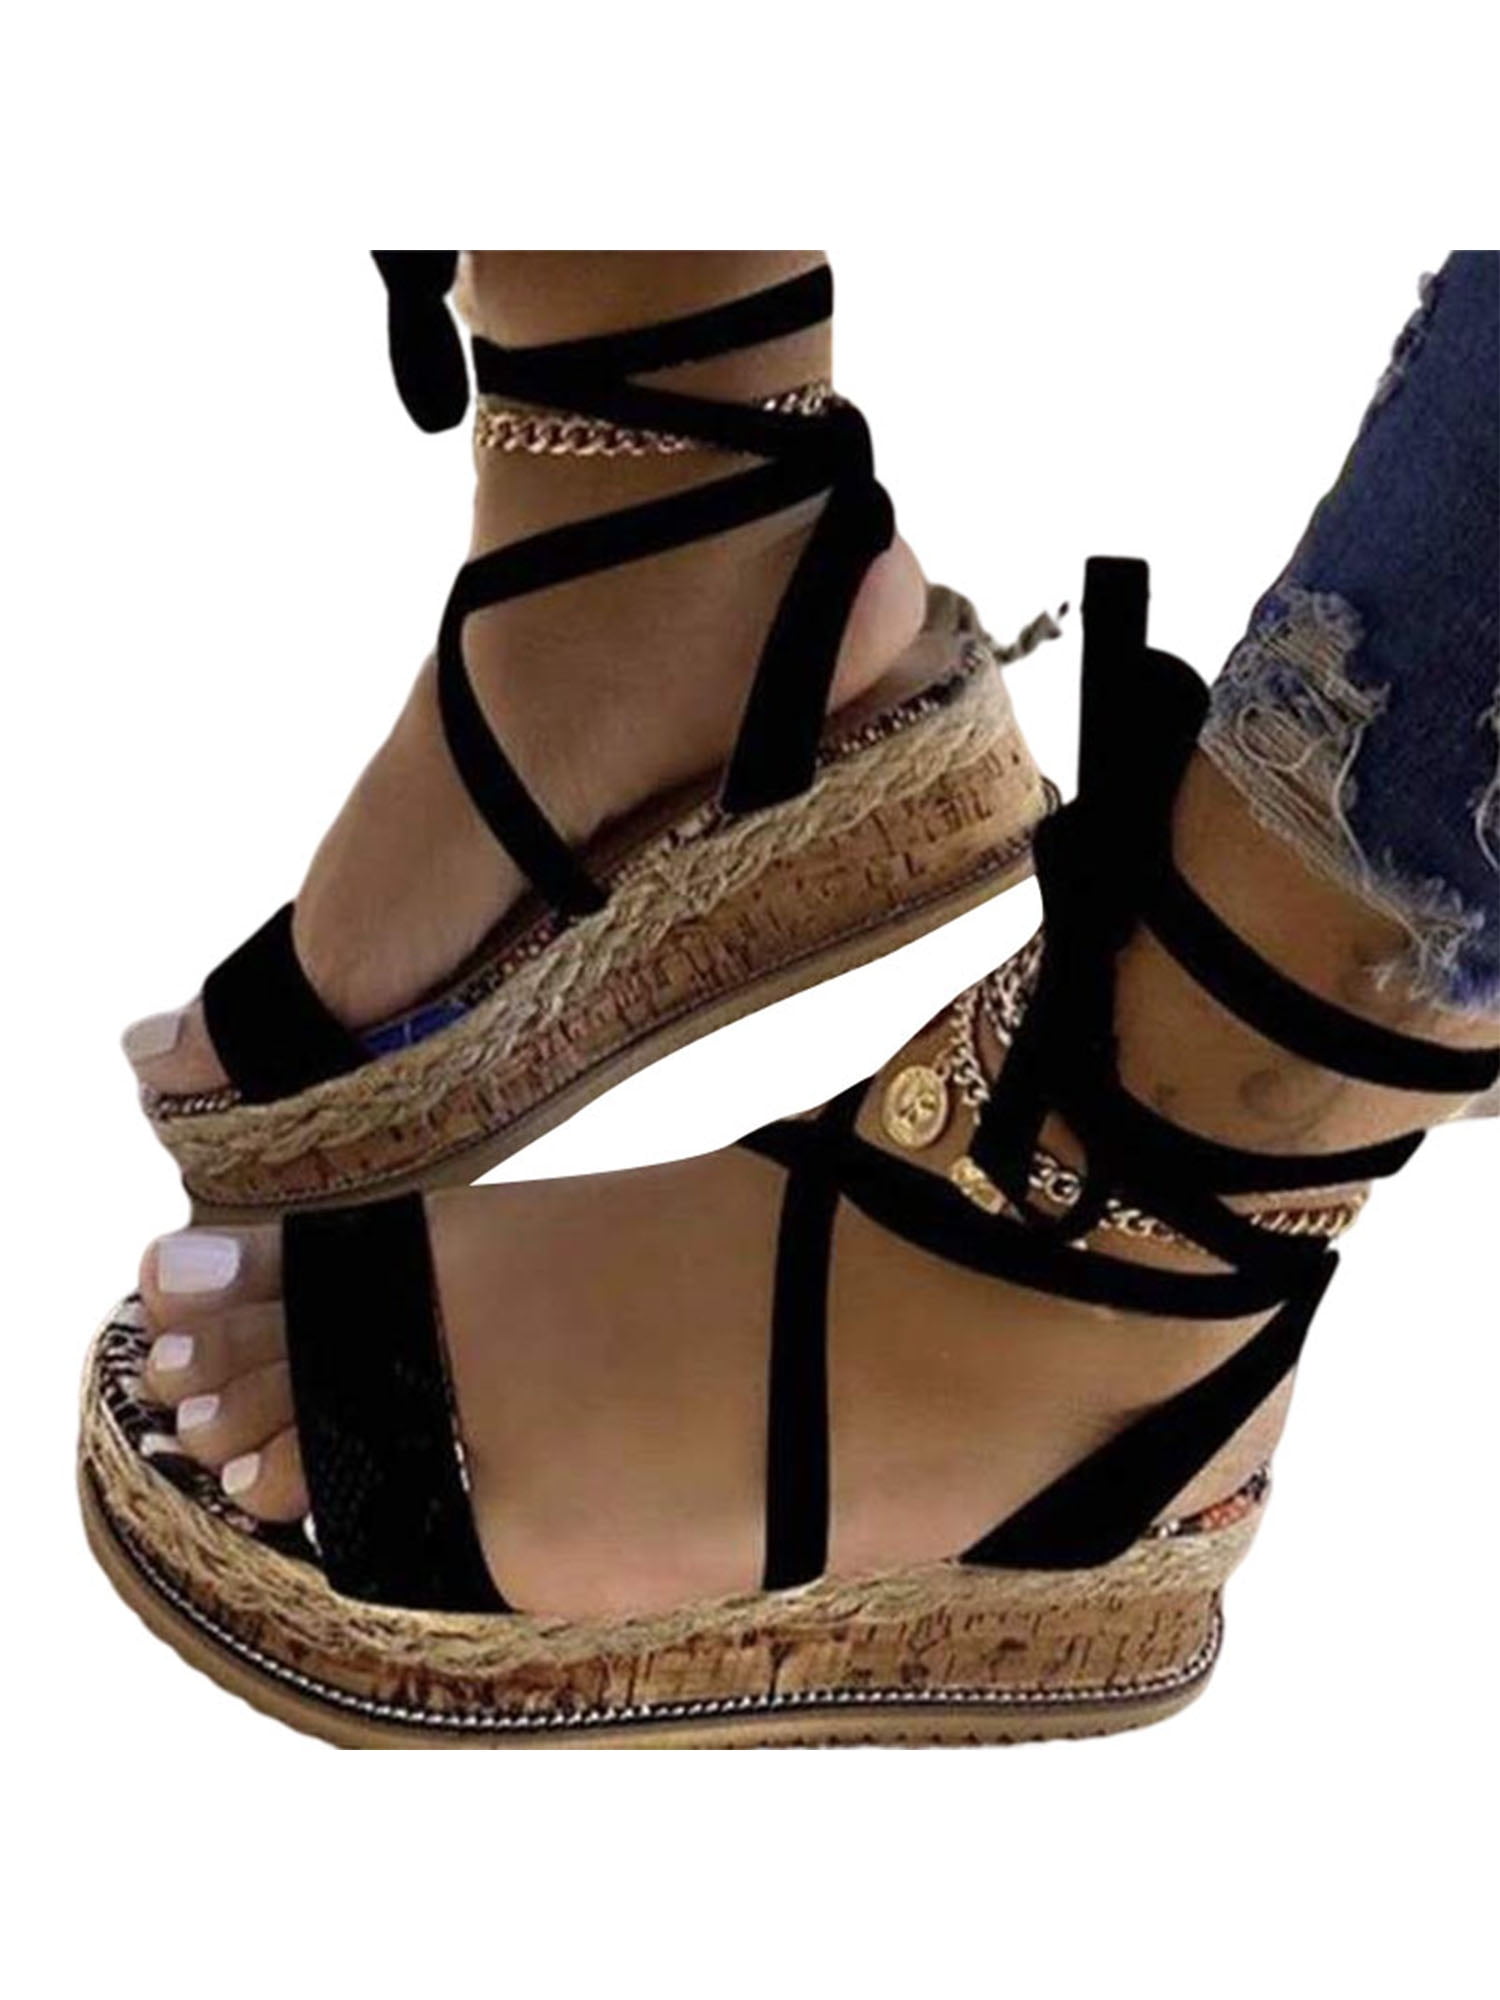 Forever 21 Black Lace Up Ghillie Wedge Heel Sandals 8 M | eBay